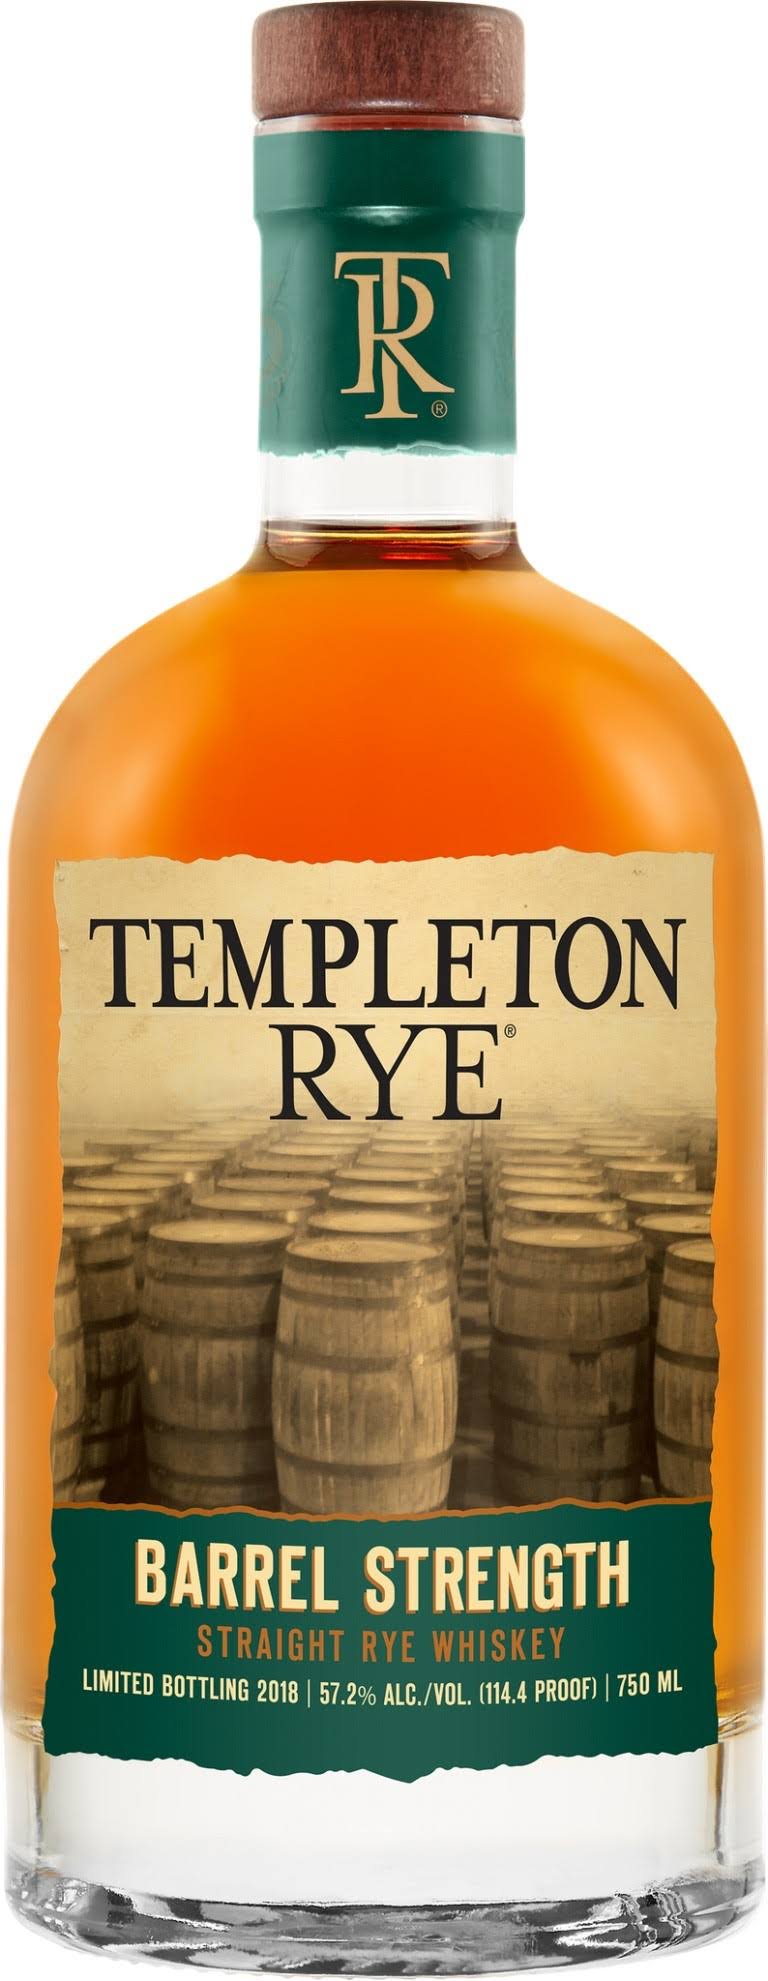 Templeton Rye Barrel 700ml